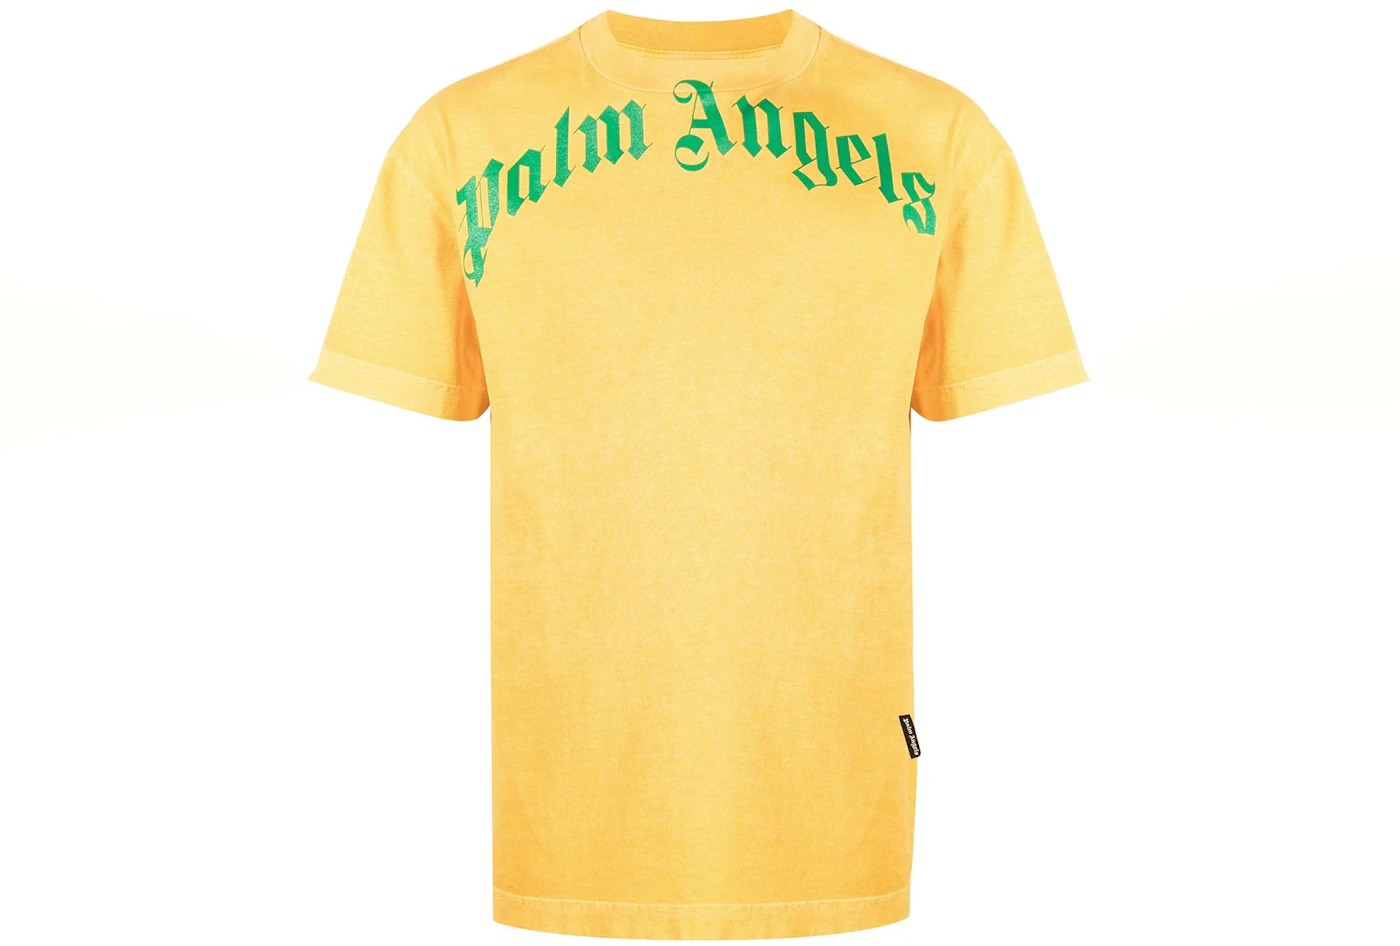 PALM ANGELS, Yellow Men's T-shirt